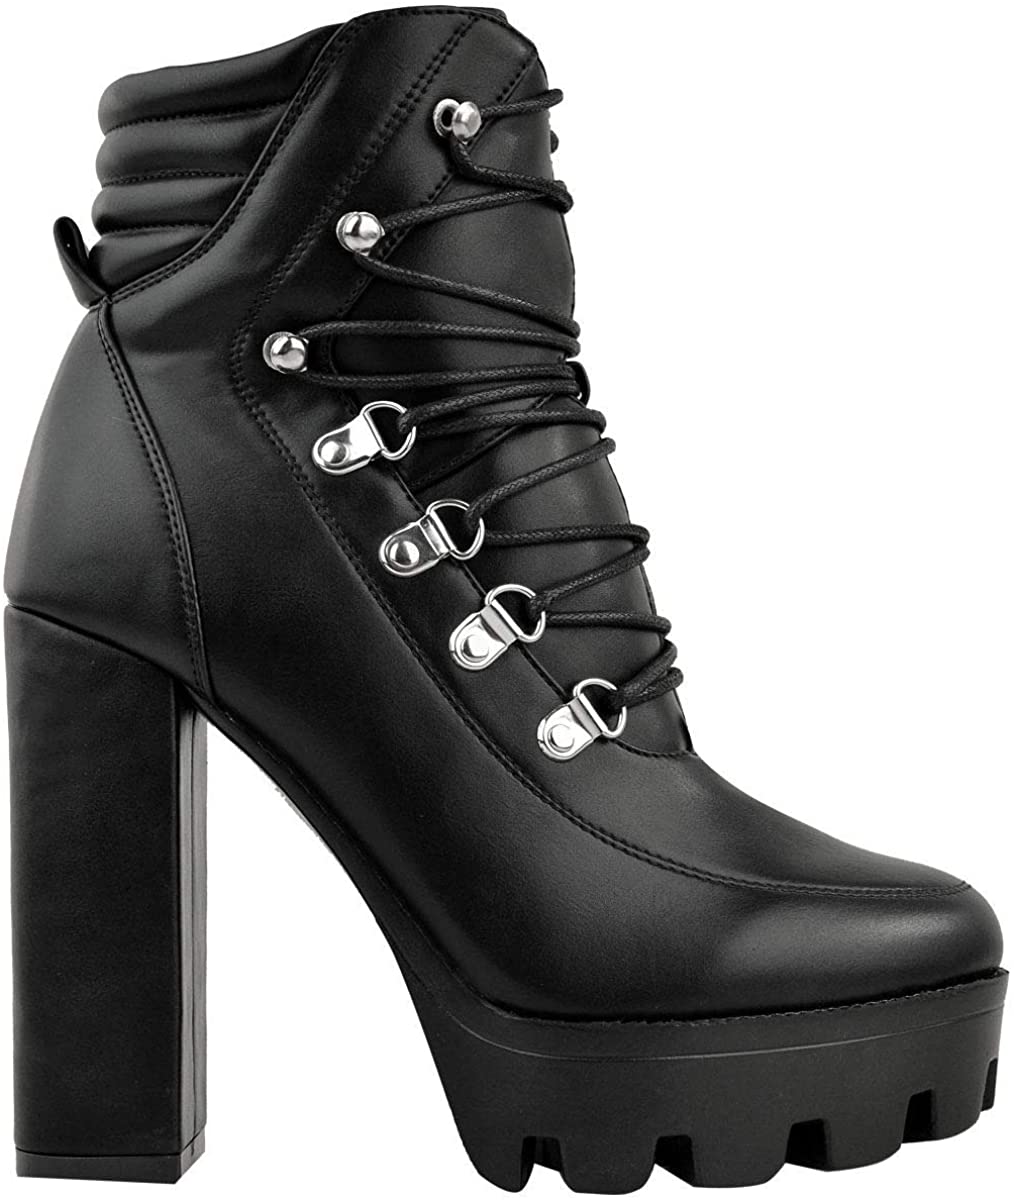 Fashion Thirsty Womens Ladies High Block Heel Platform Ankle Boots Black Goth Punk Lace Up